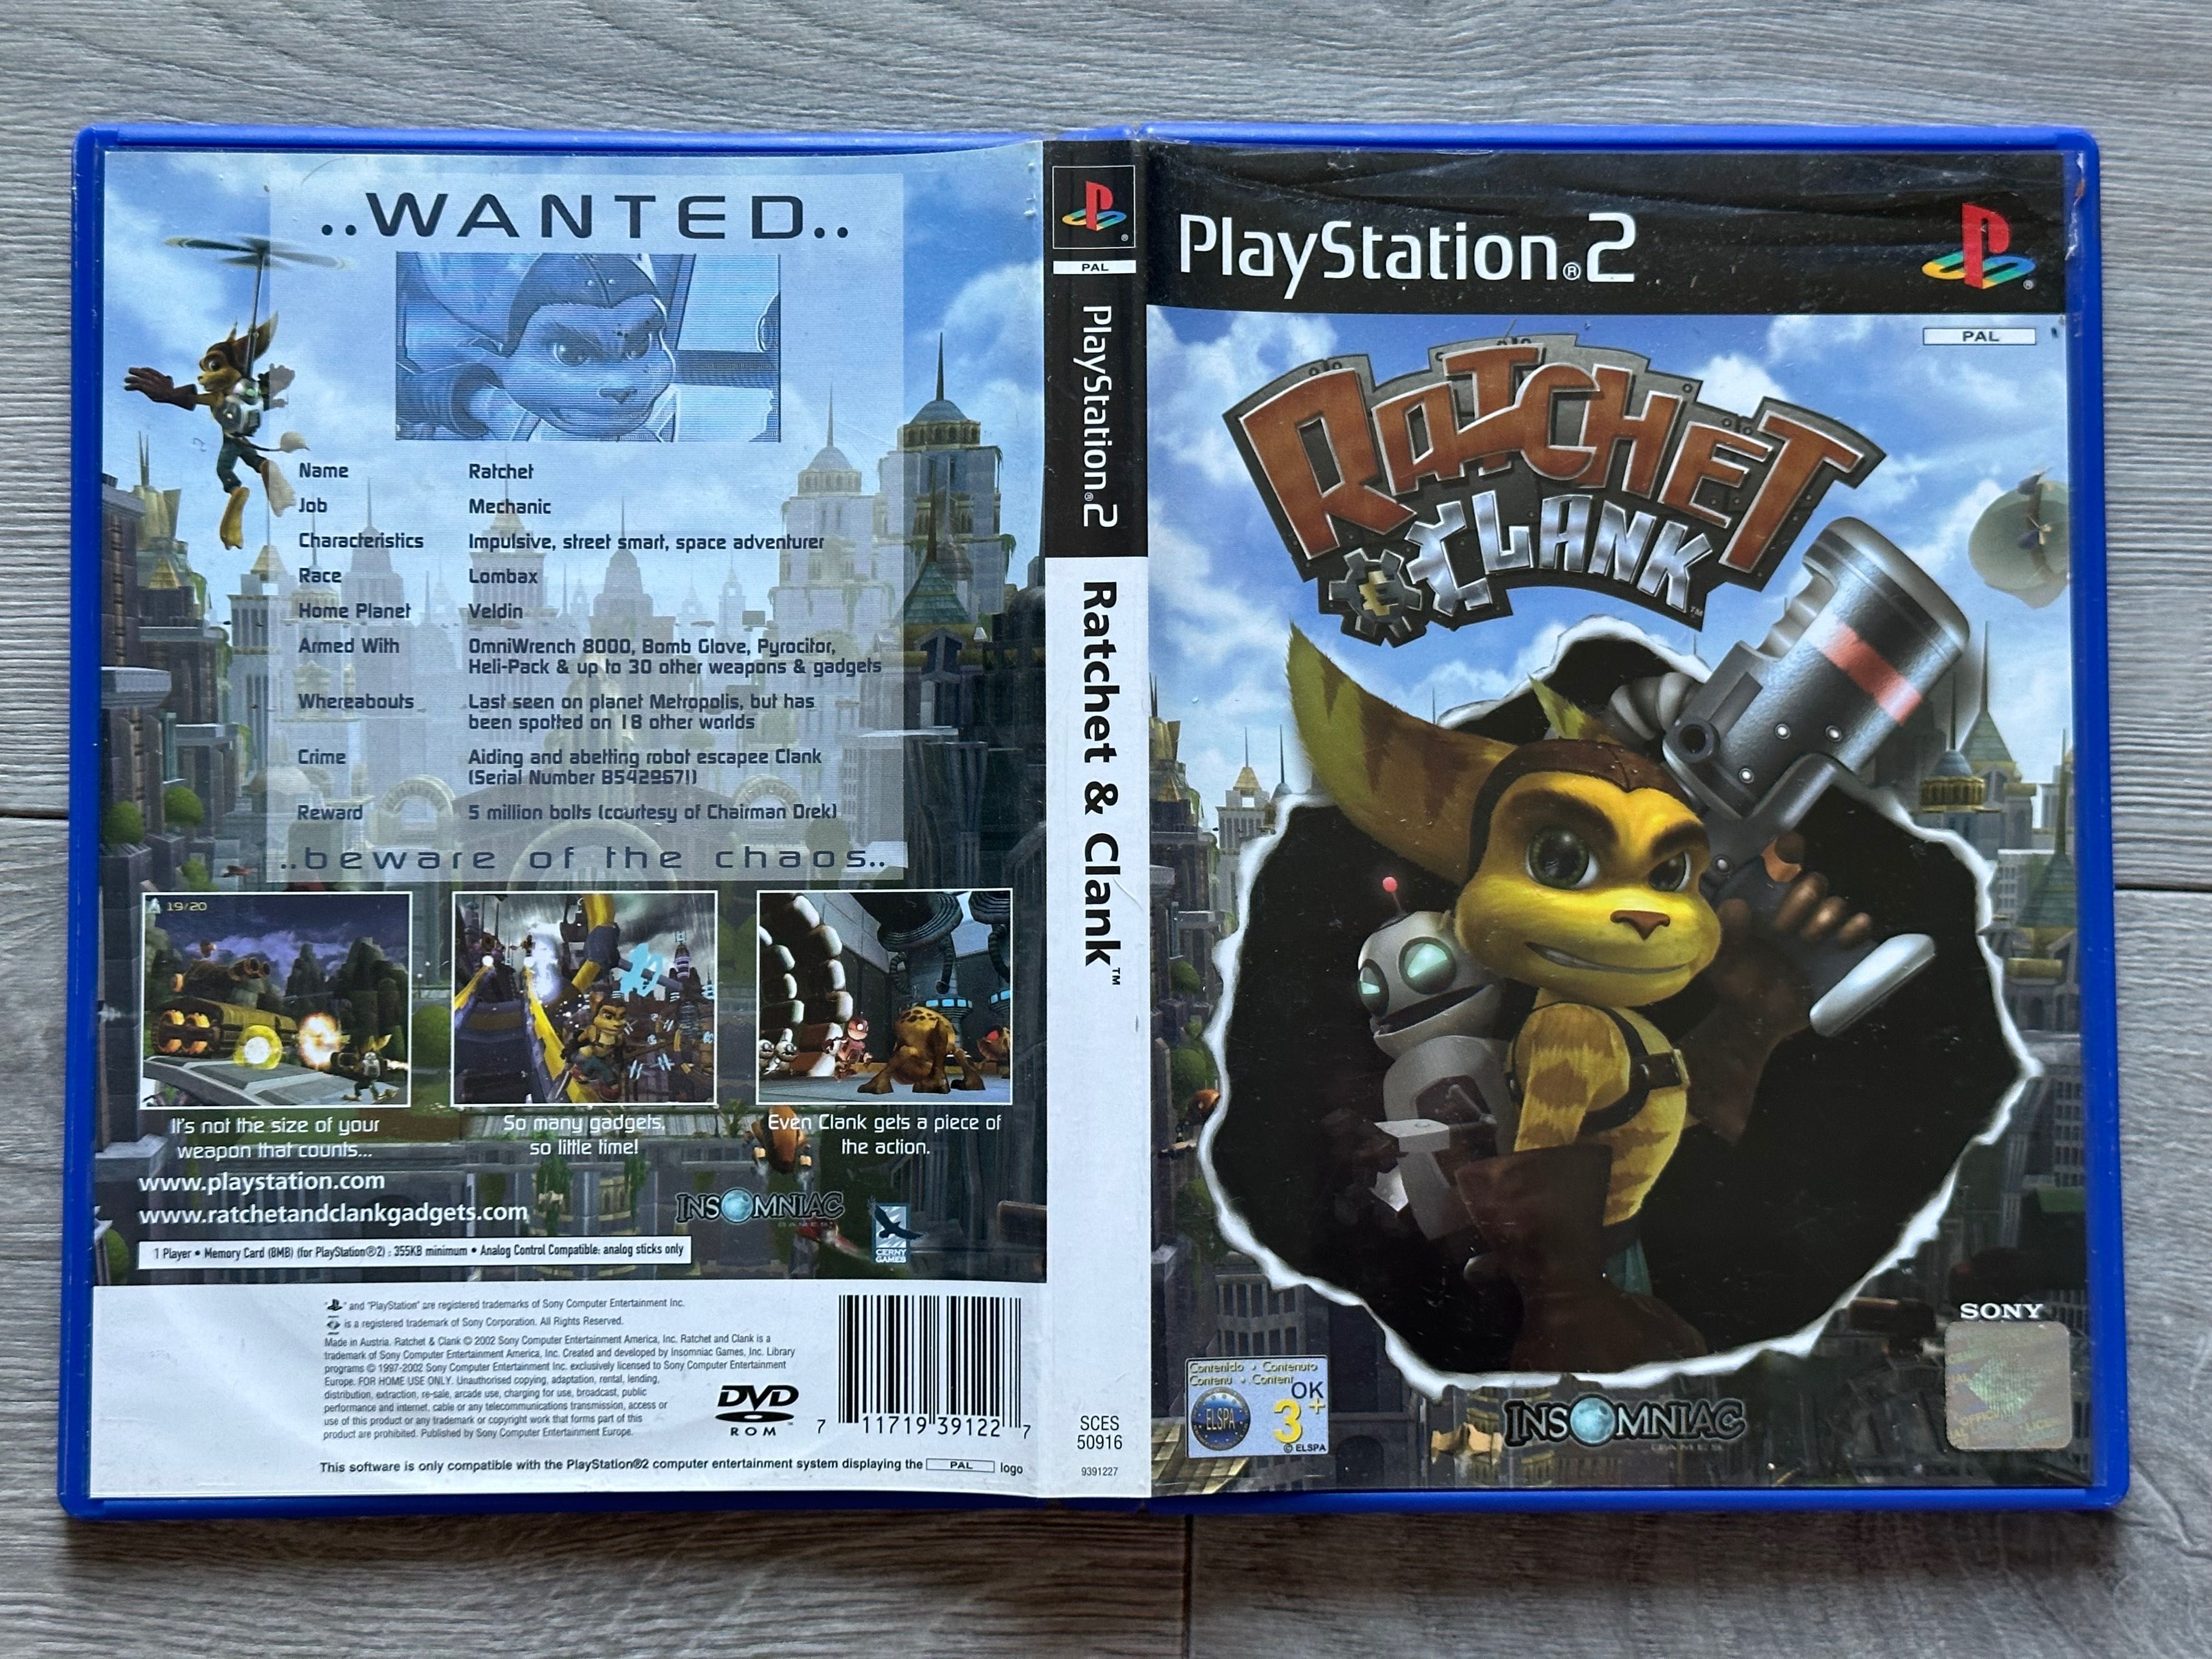 Ratchet & Clank / Playstation 2